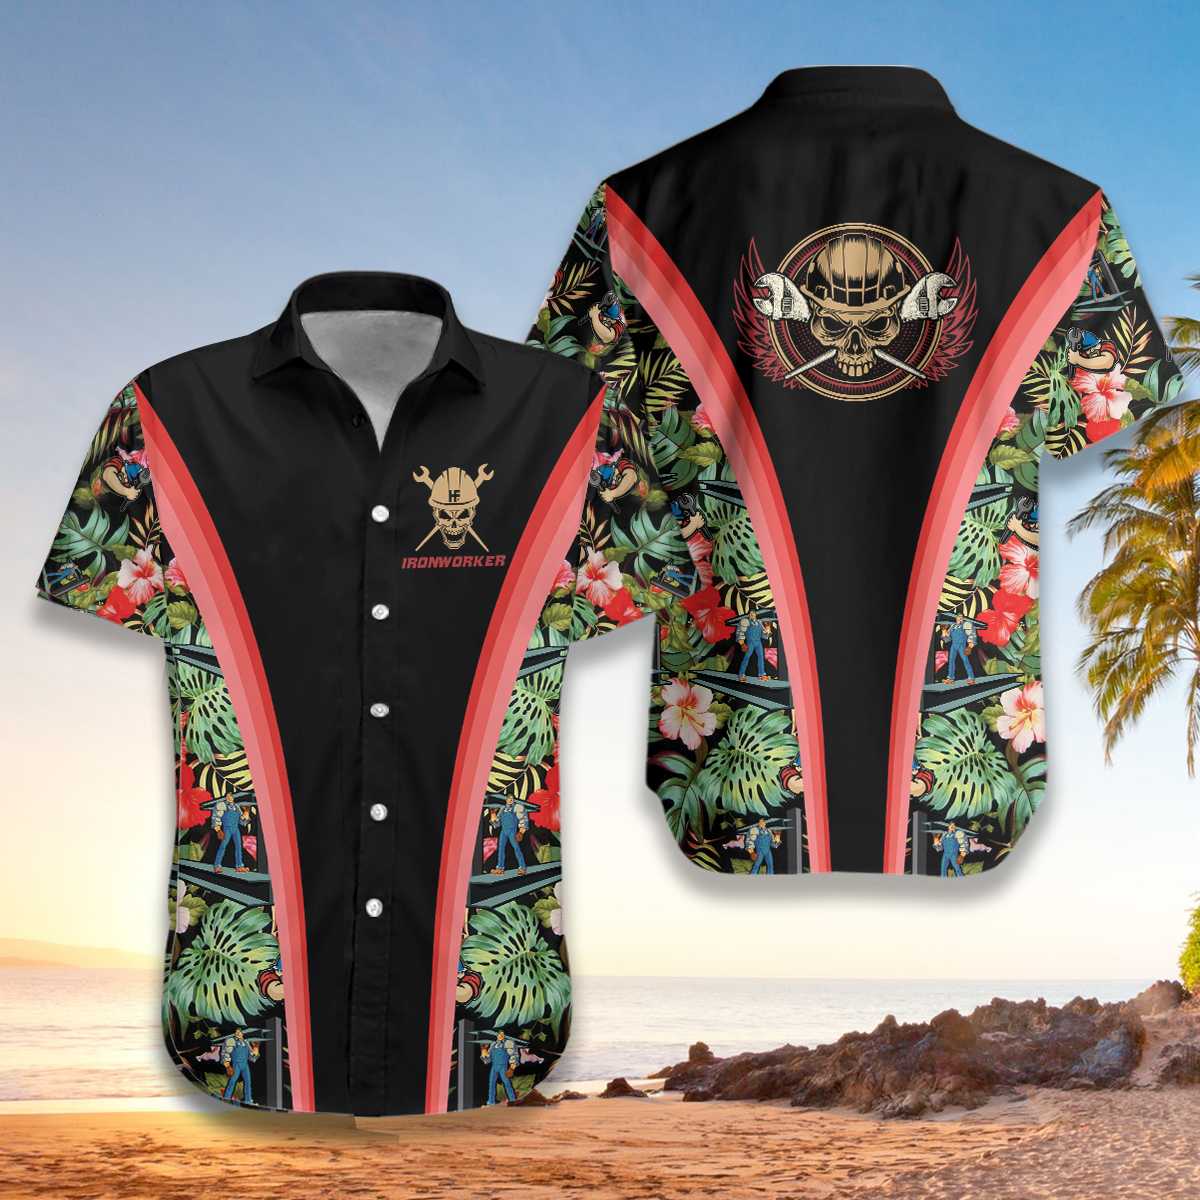 Ironworker Tropical hawaiian shirt